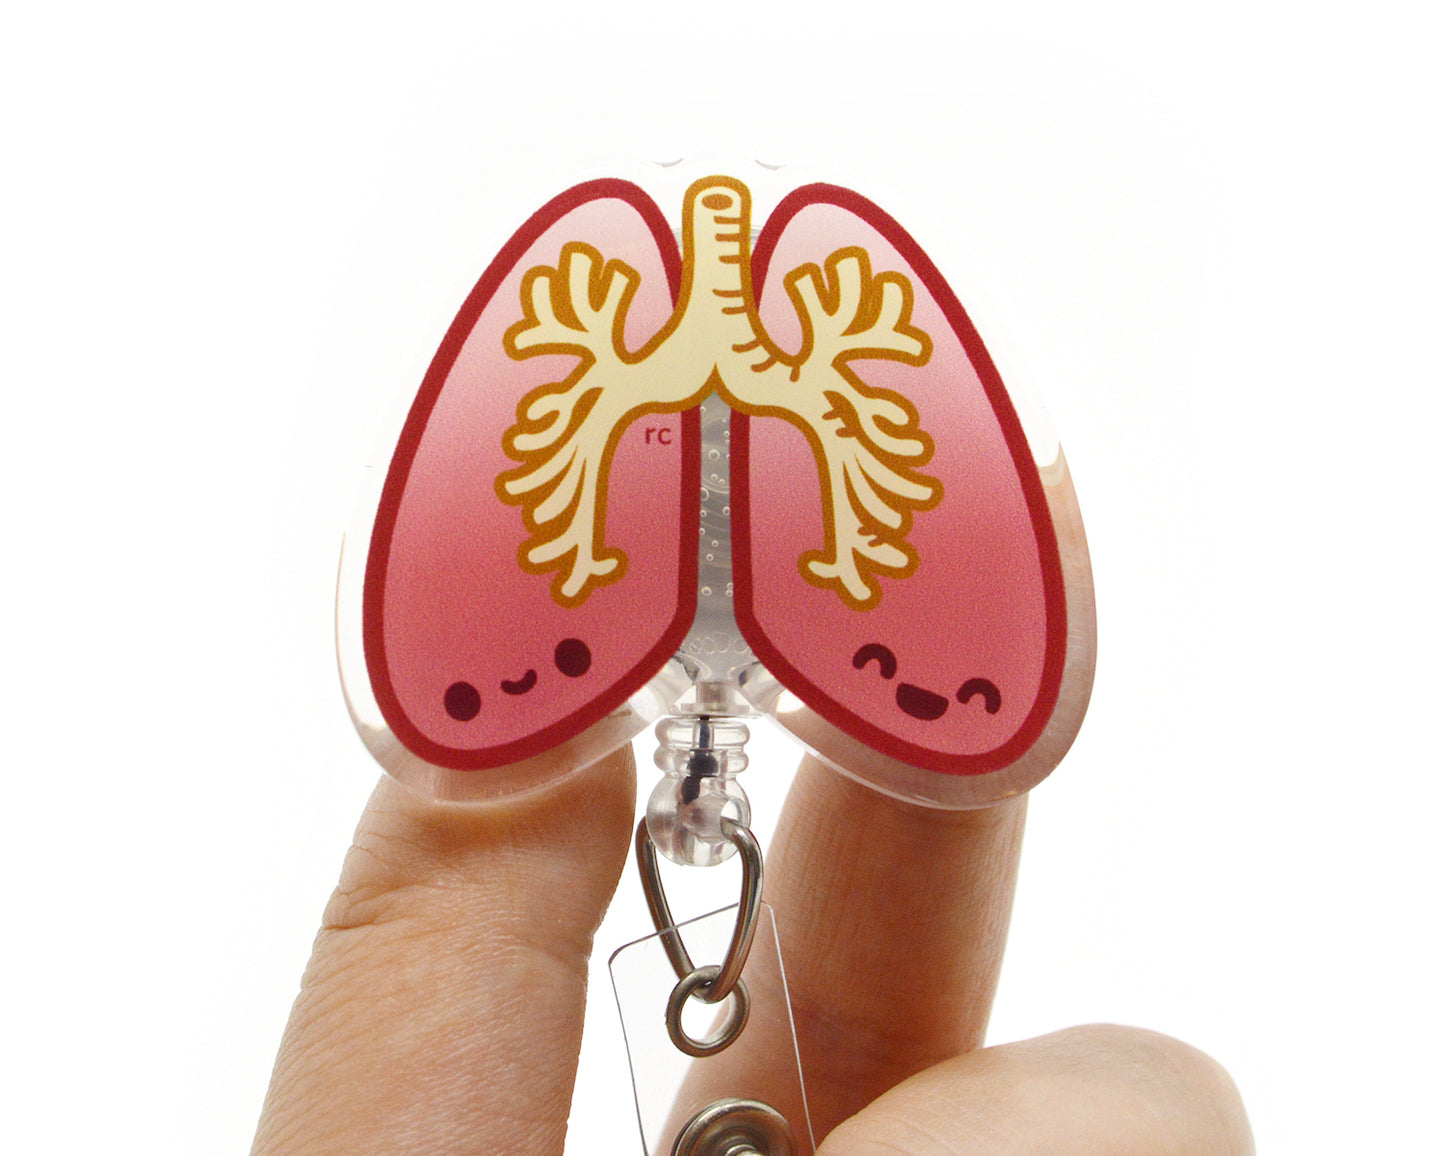 Lungs Acrylic Badge Reel